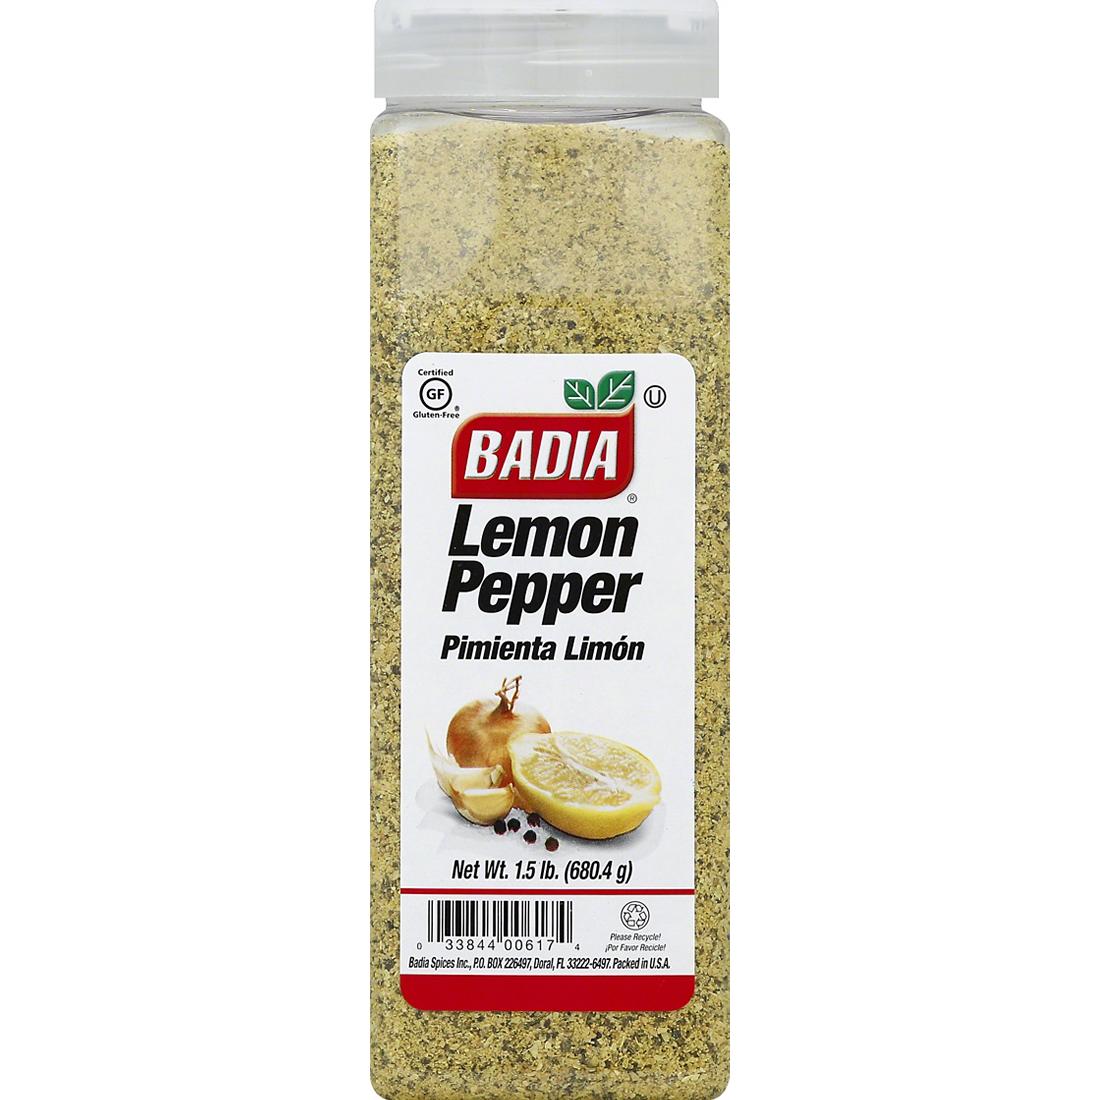 Badia Lemon Pepper 1.5 lb 617 - Texas Star Grill Shop 617